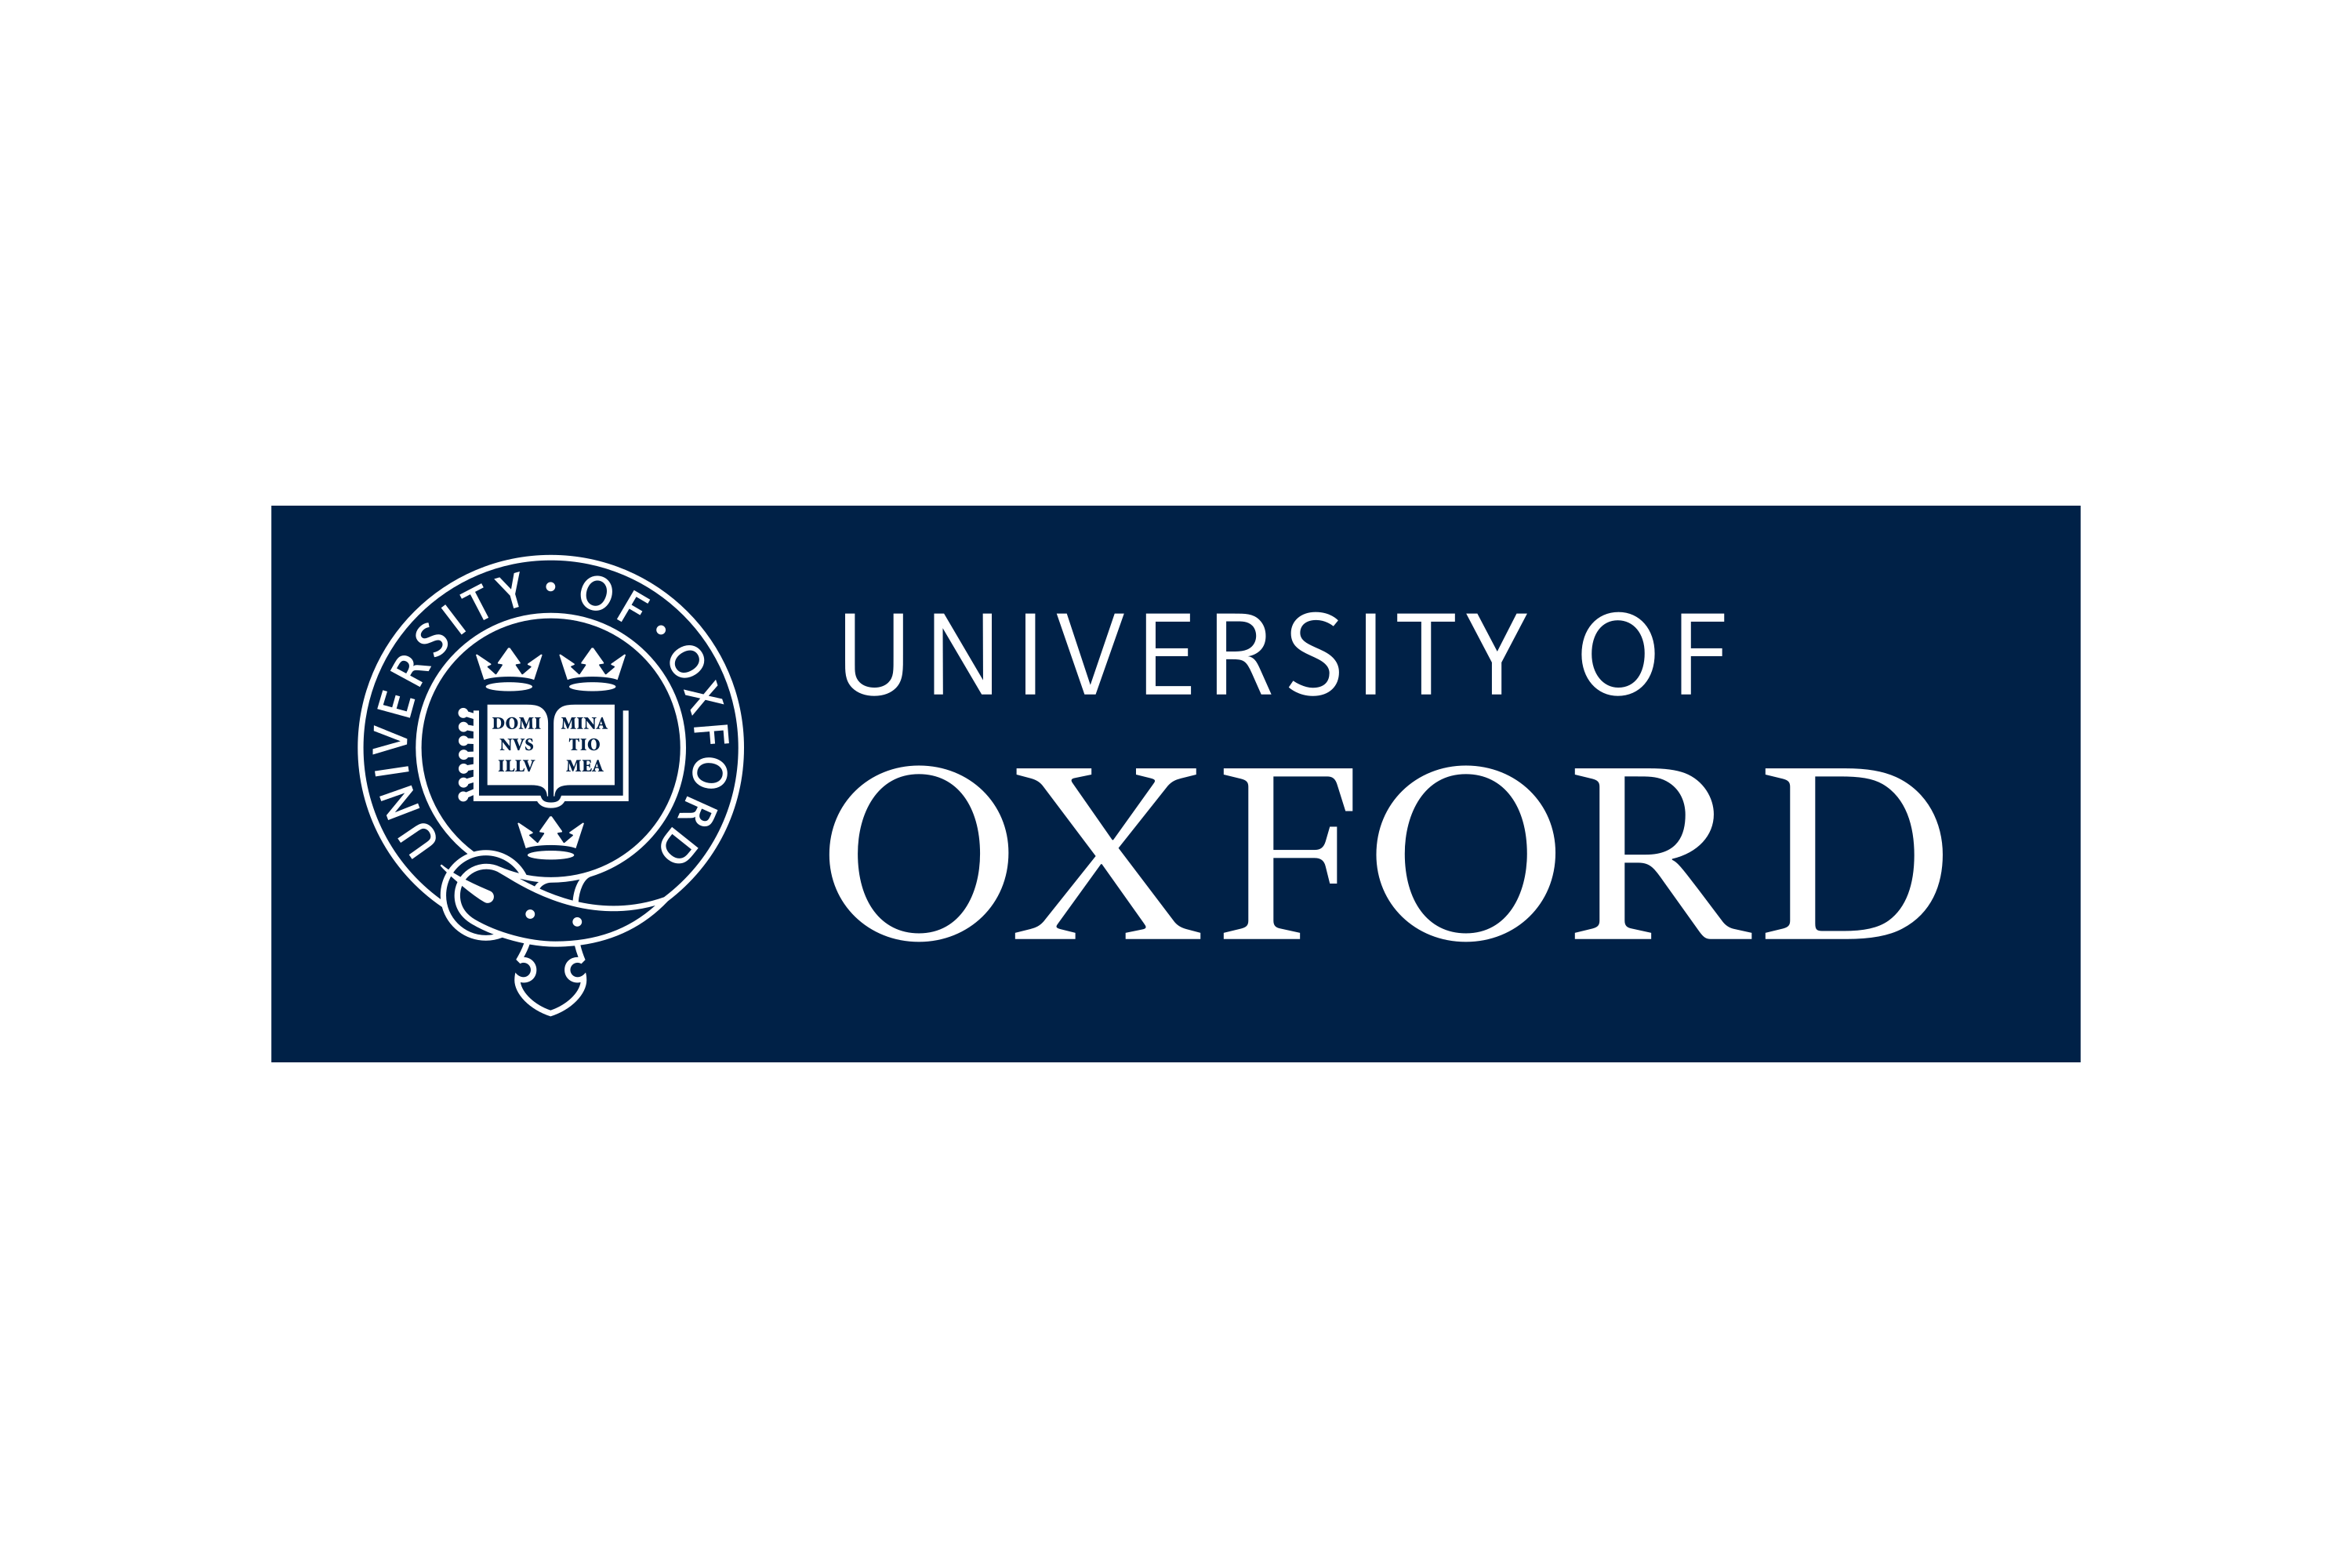 Download University of Oxford Logo in SVG Vector or PNG File Format ...